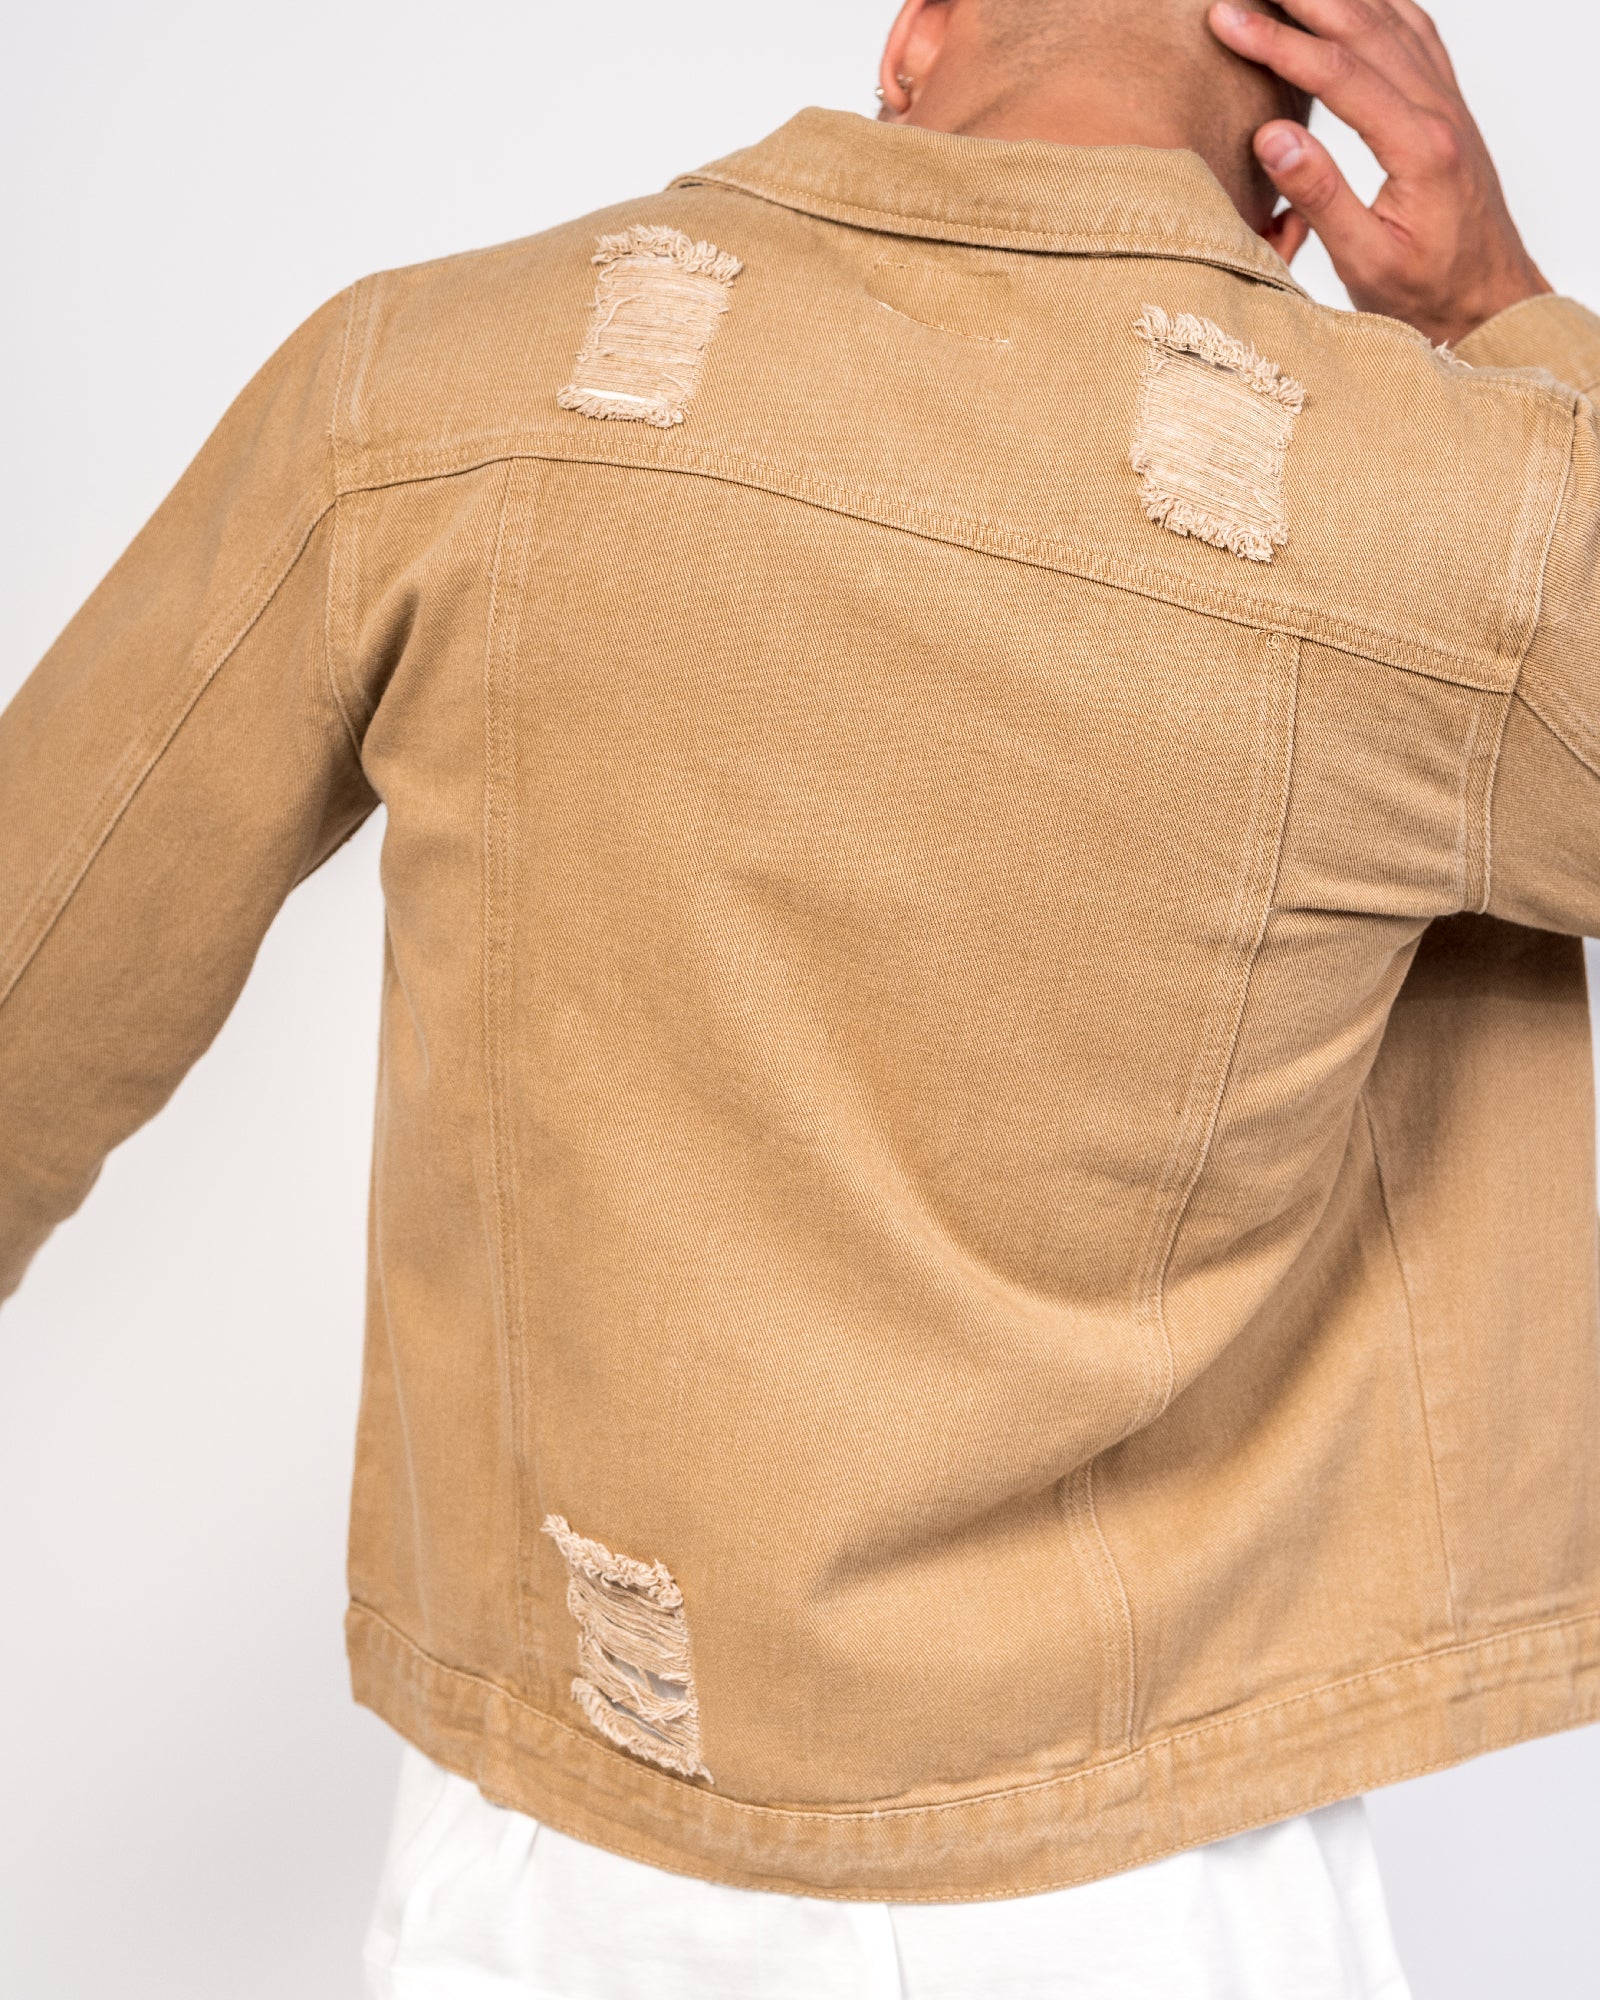 Oversized Tan Distressed Denim Jacket